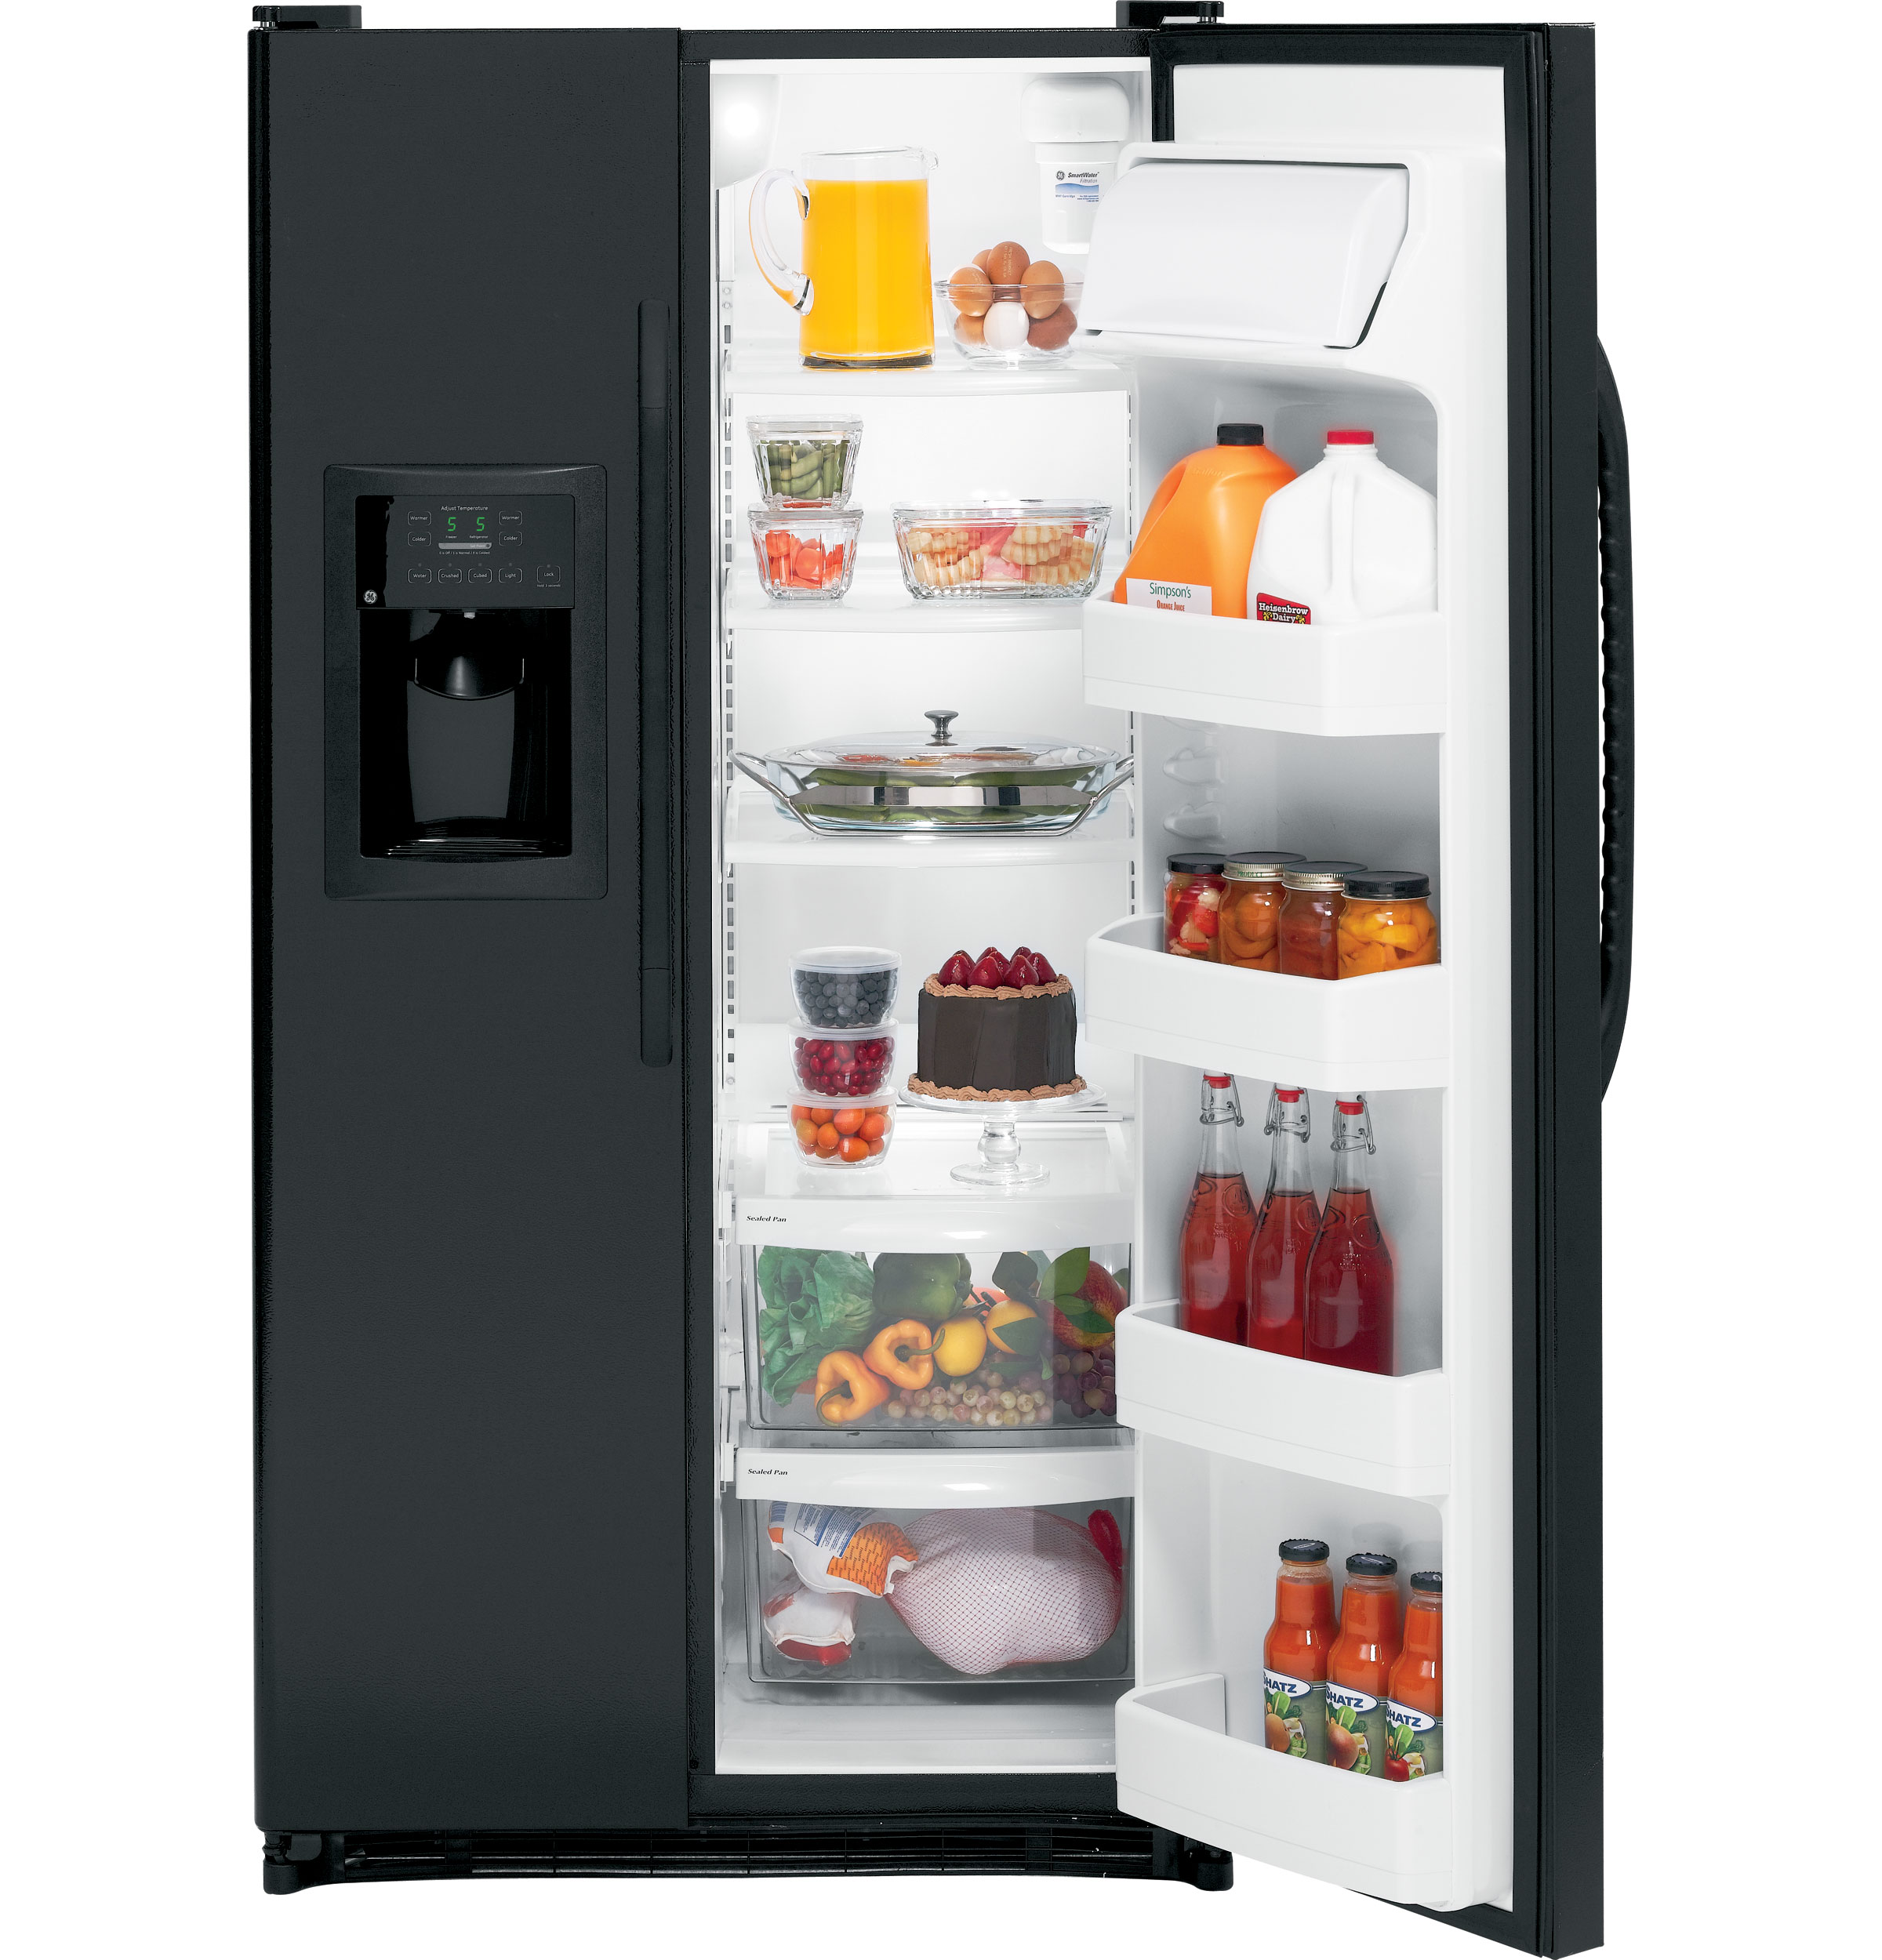 GE® 25.0 Cu. Ft. Capacity Side-By-Side Refrigerator